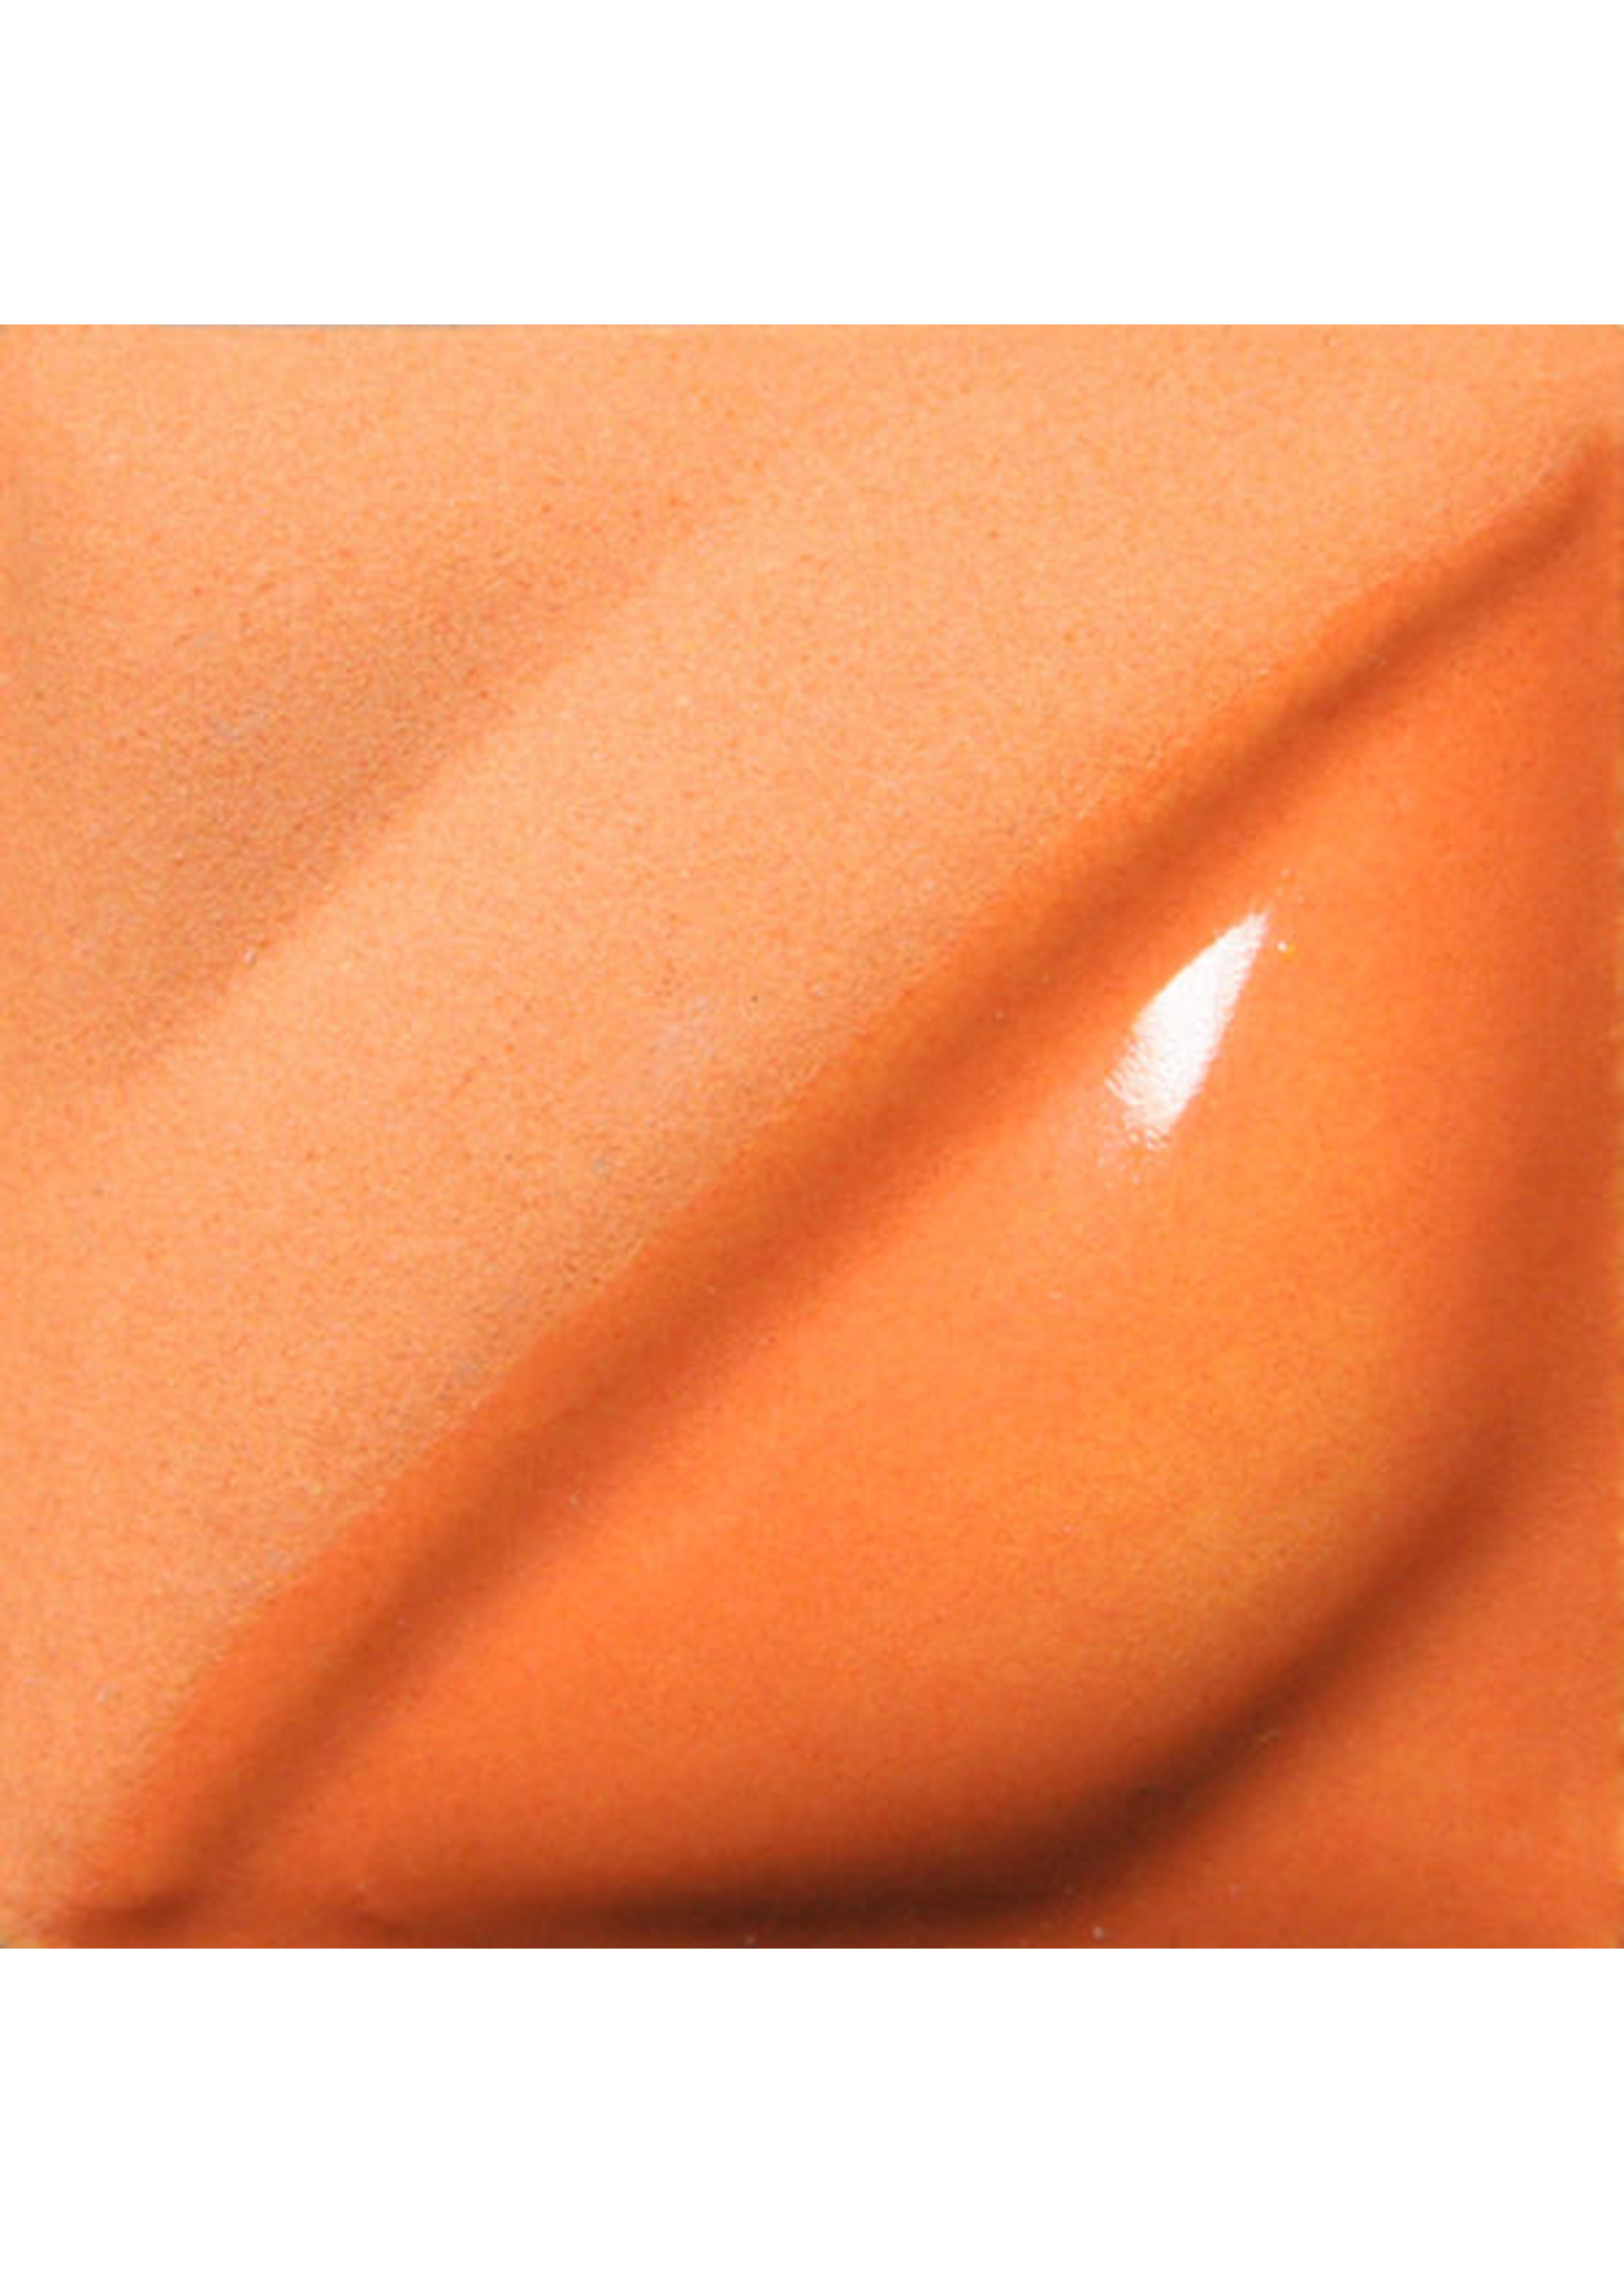 Amaco Real Orange Velvet underglaze 59ml